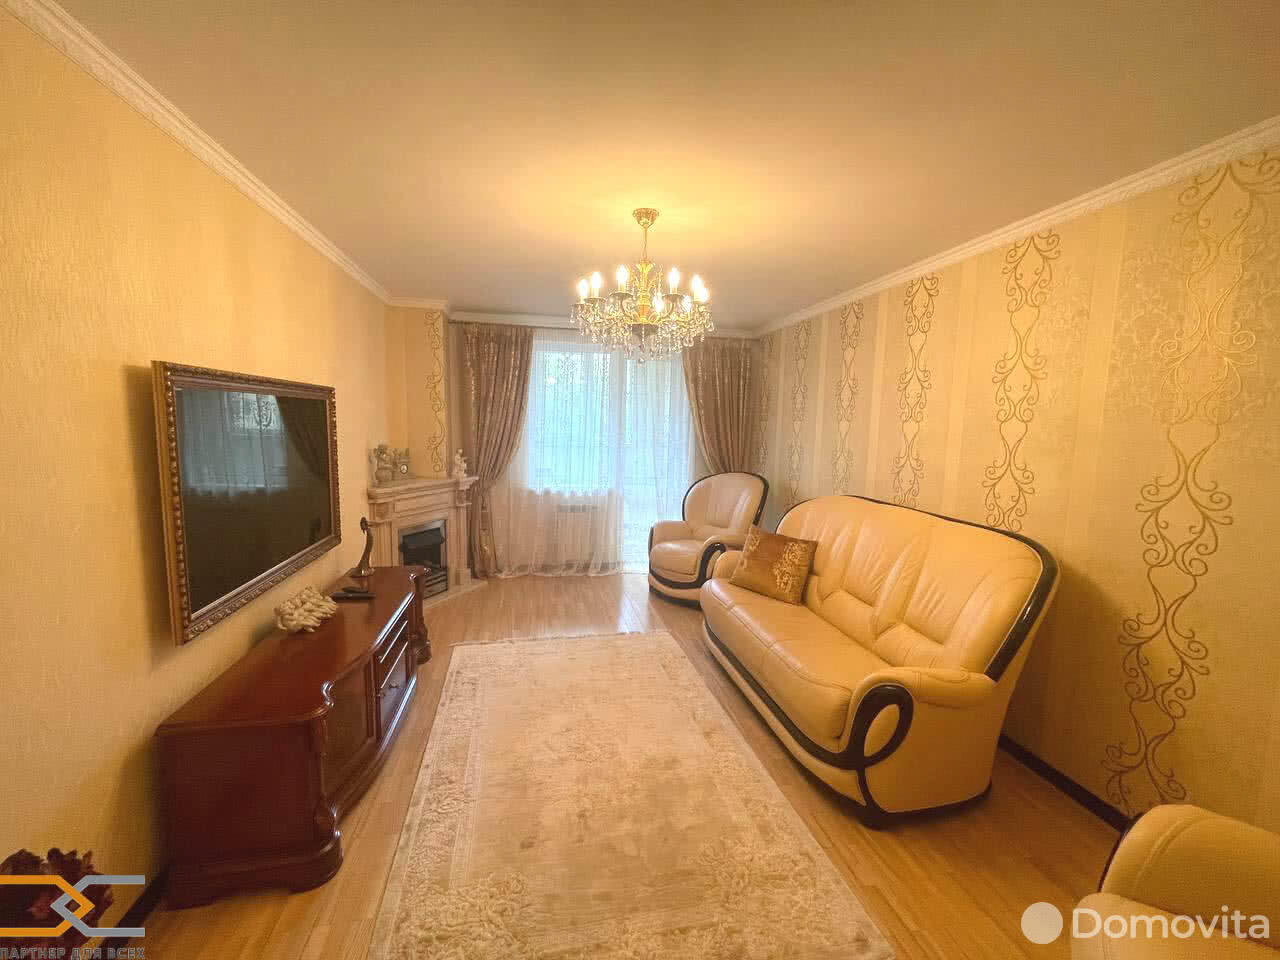 квартира, Минск, ул. Болеслава Берута, д. 11А, стоимость аренды 3 095 р./мес.